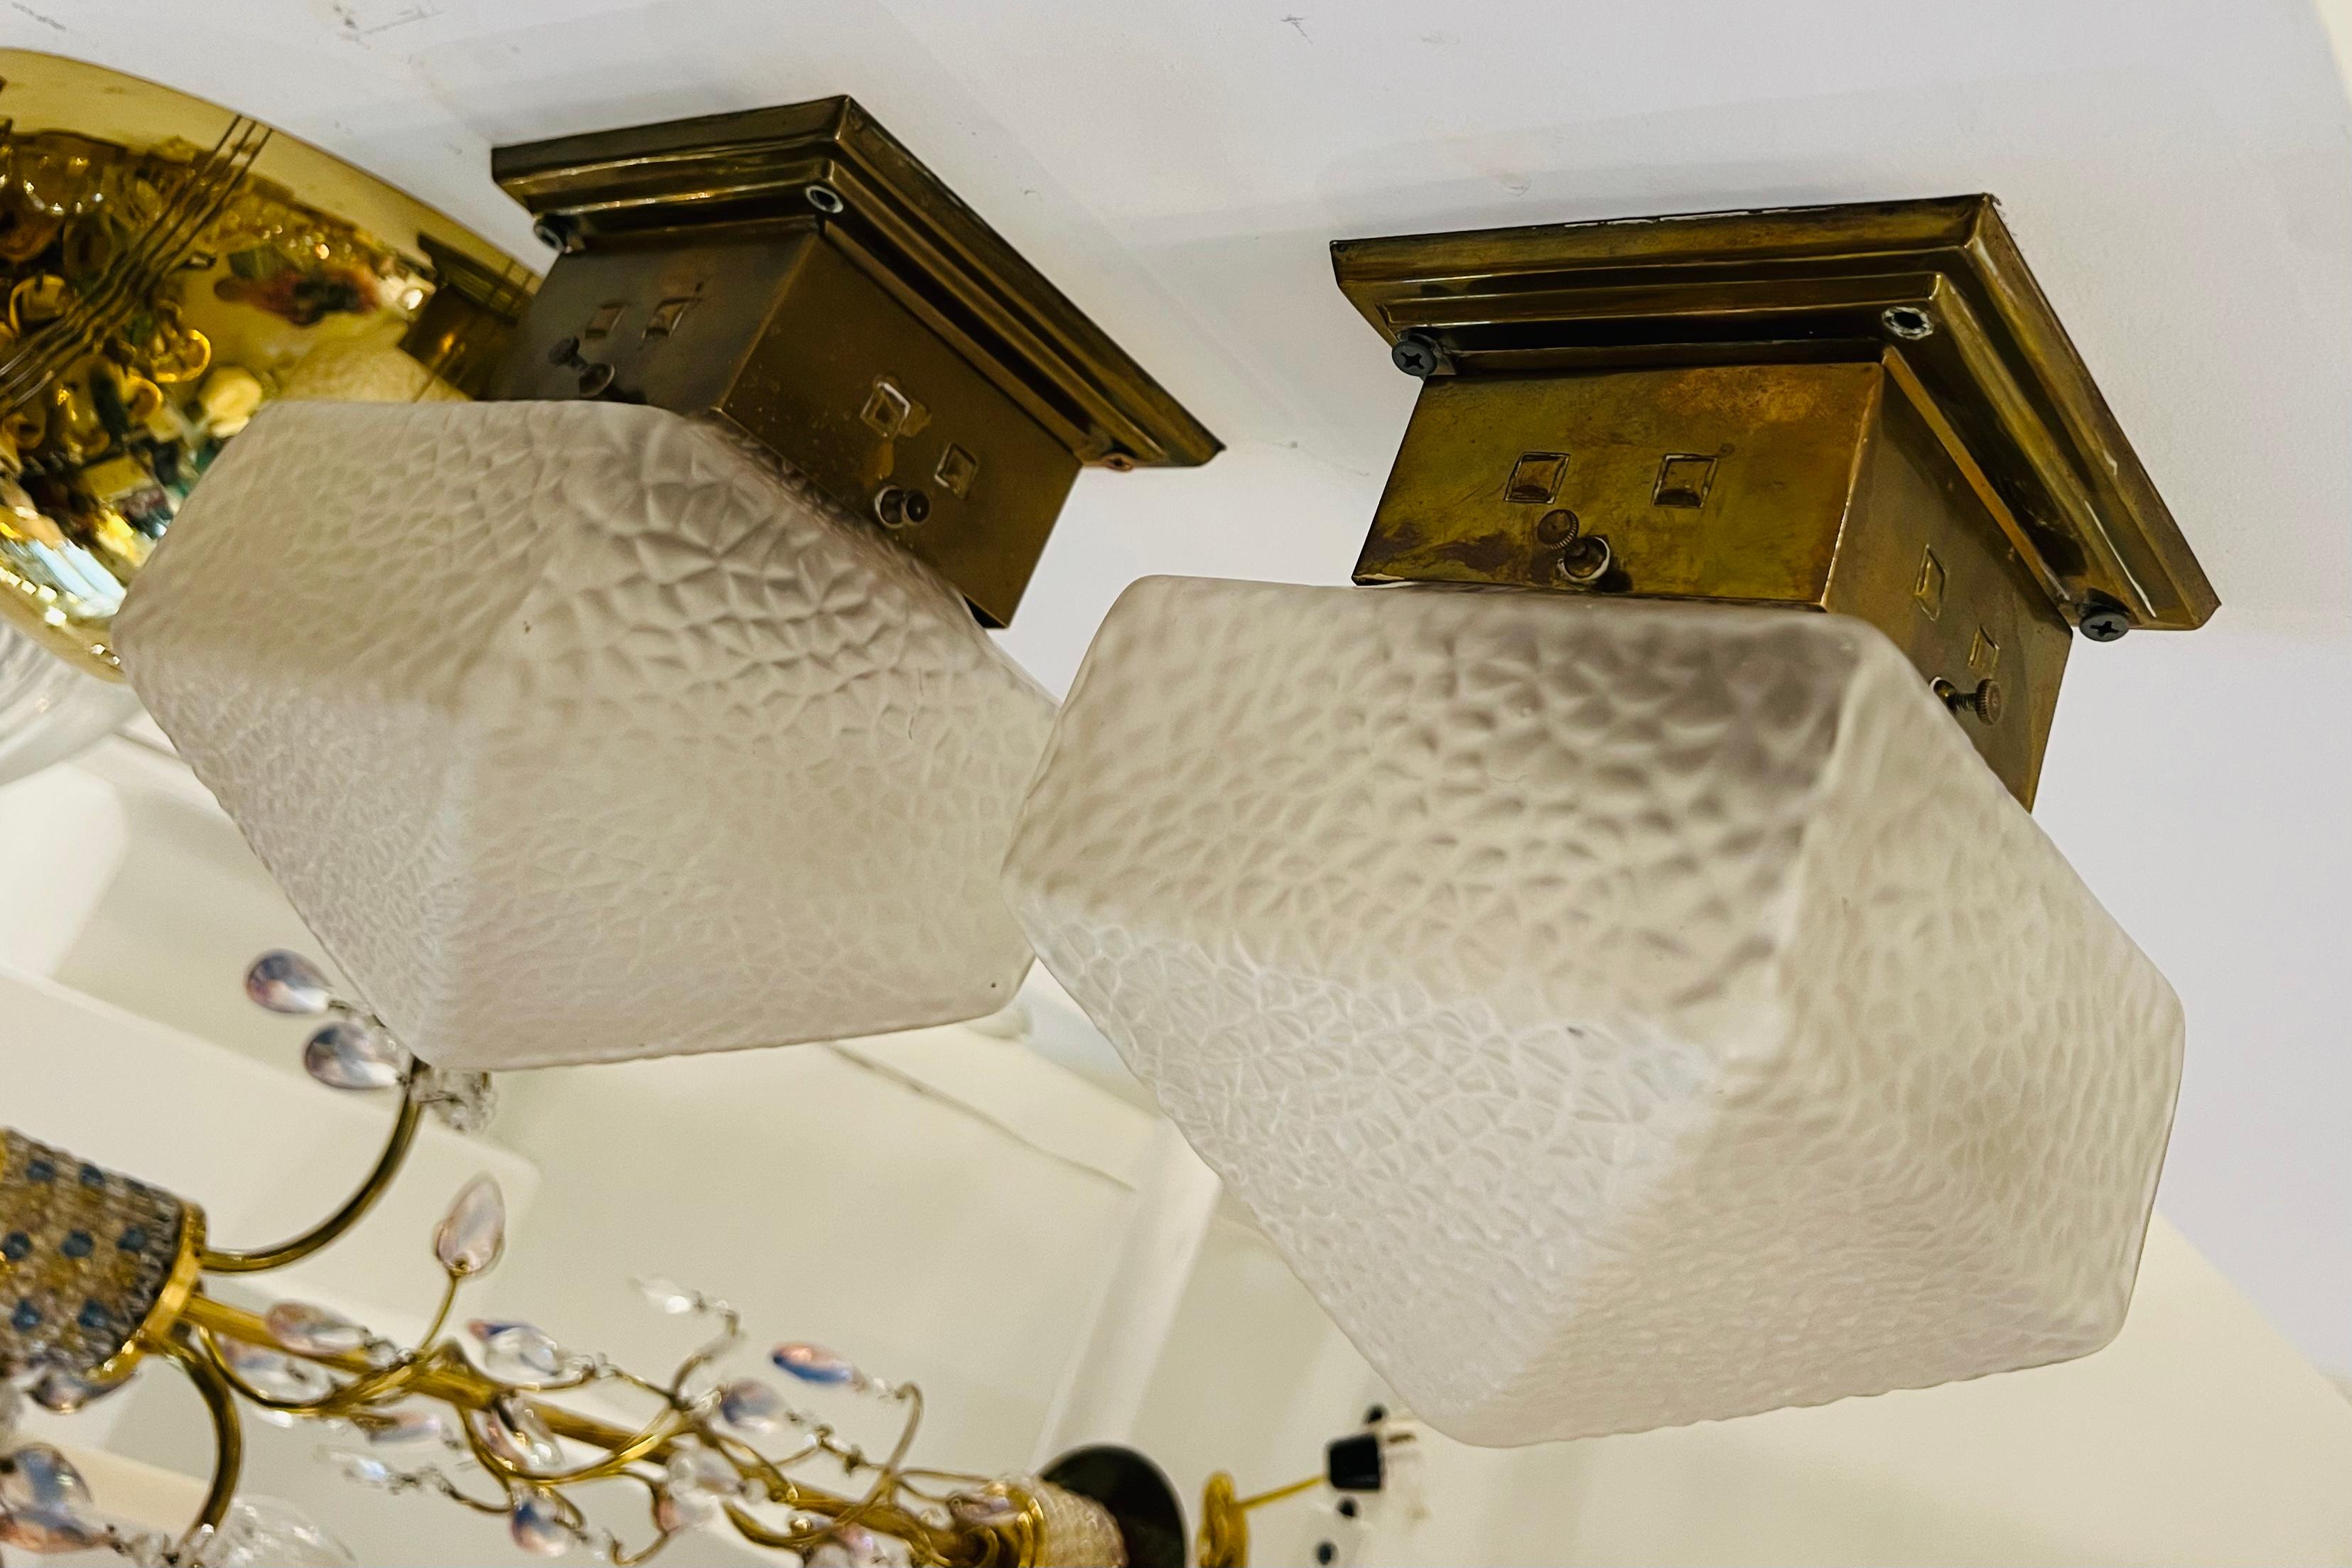 Pair of Austrian Secessionist Ceiling Lamps 1920s Art Deco For Sale 2